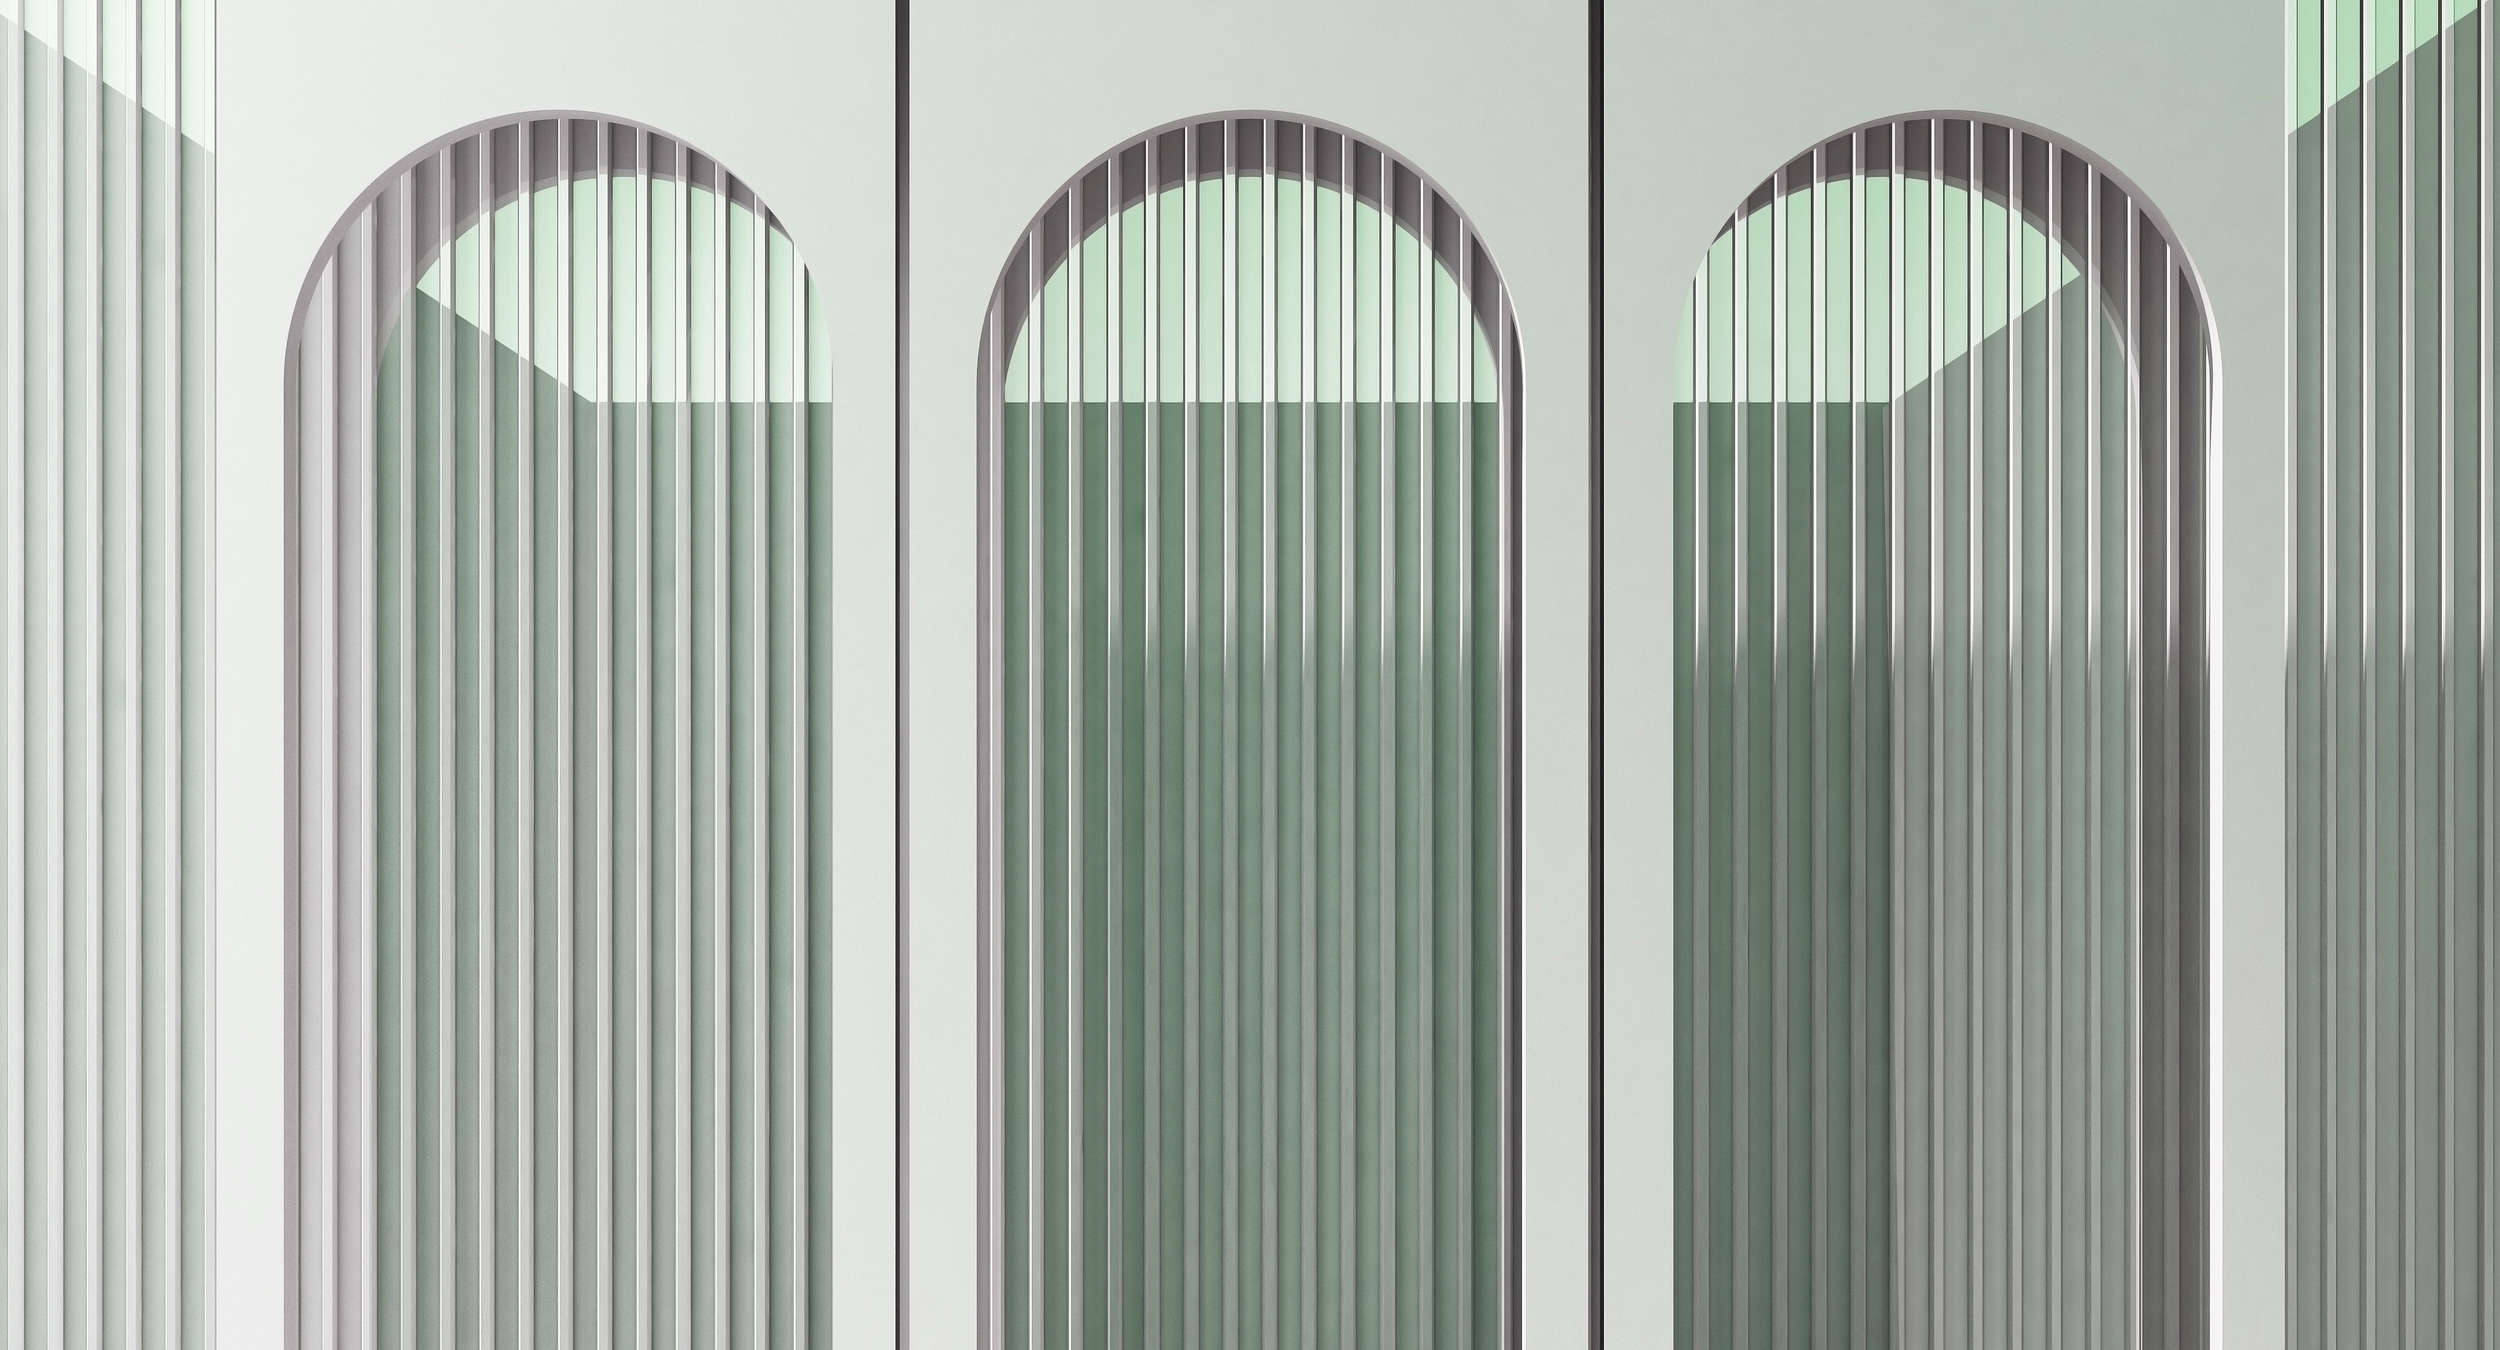             Escape Room 3 - Architecturaal Behang Modern Views Grijs & Groen
        